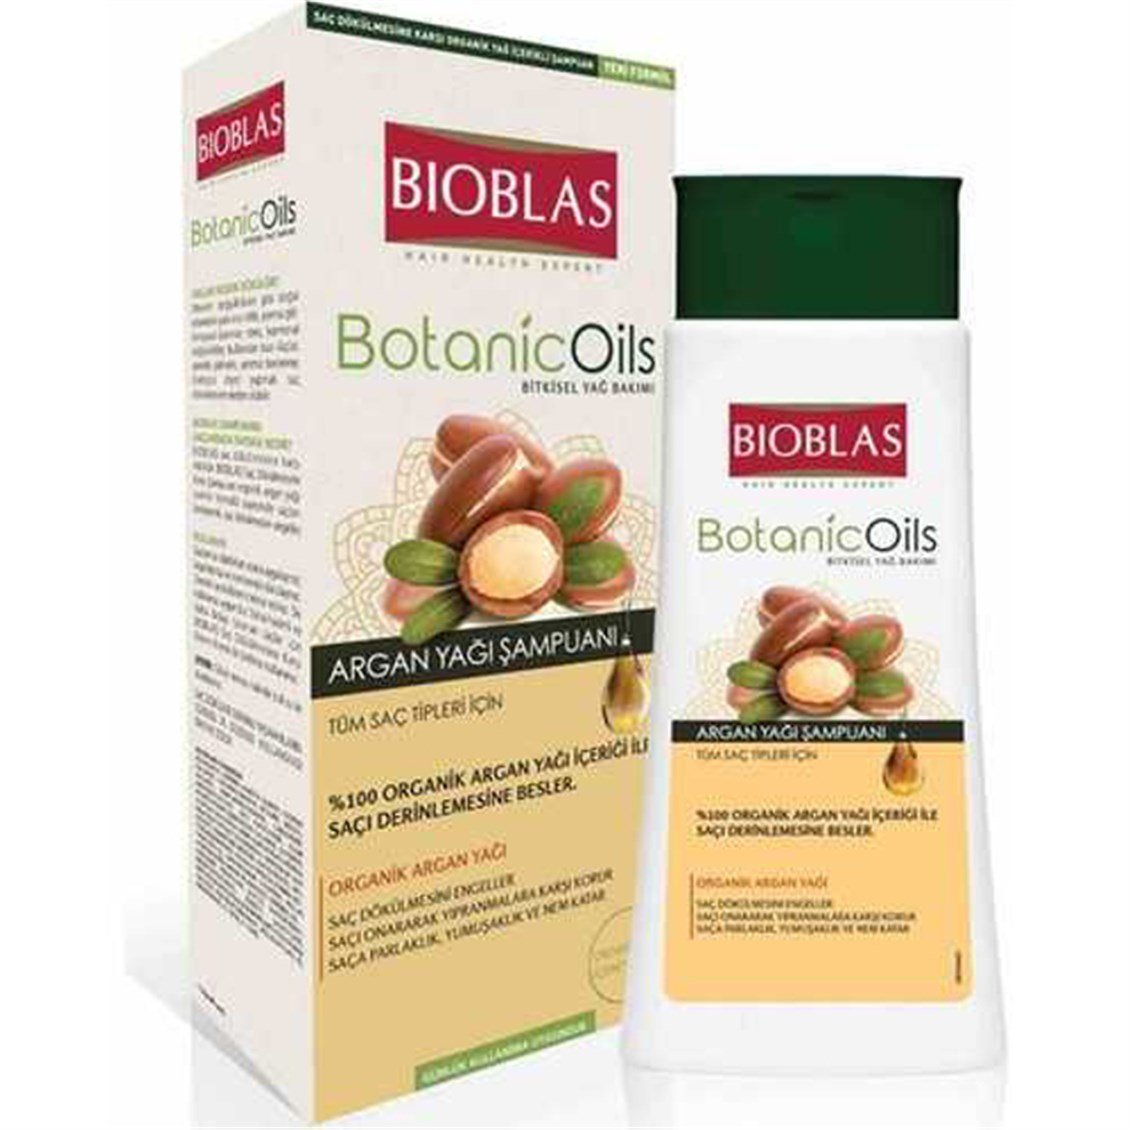 Bioblas Botanic Oils Argan Yağı Şampuanı 360 ml - Onur Market